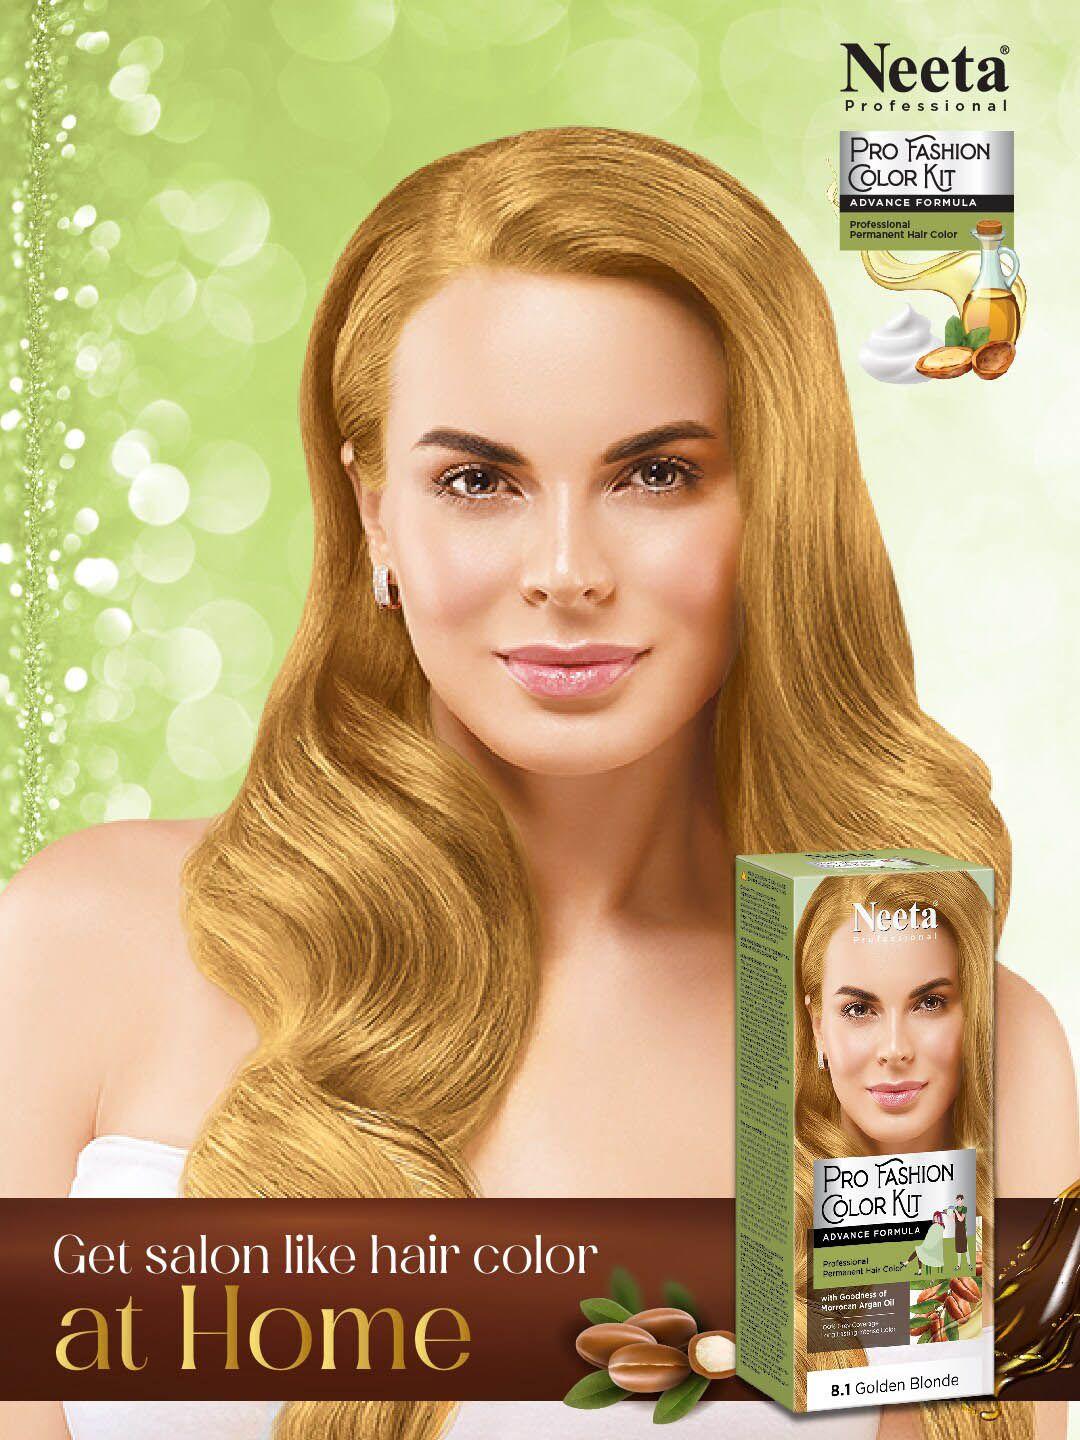 neeta professional pro fashion permanent hair color kit 100g - golden blonde 8.1